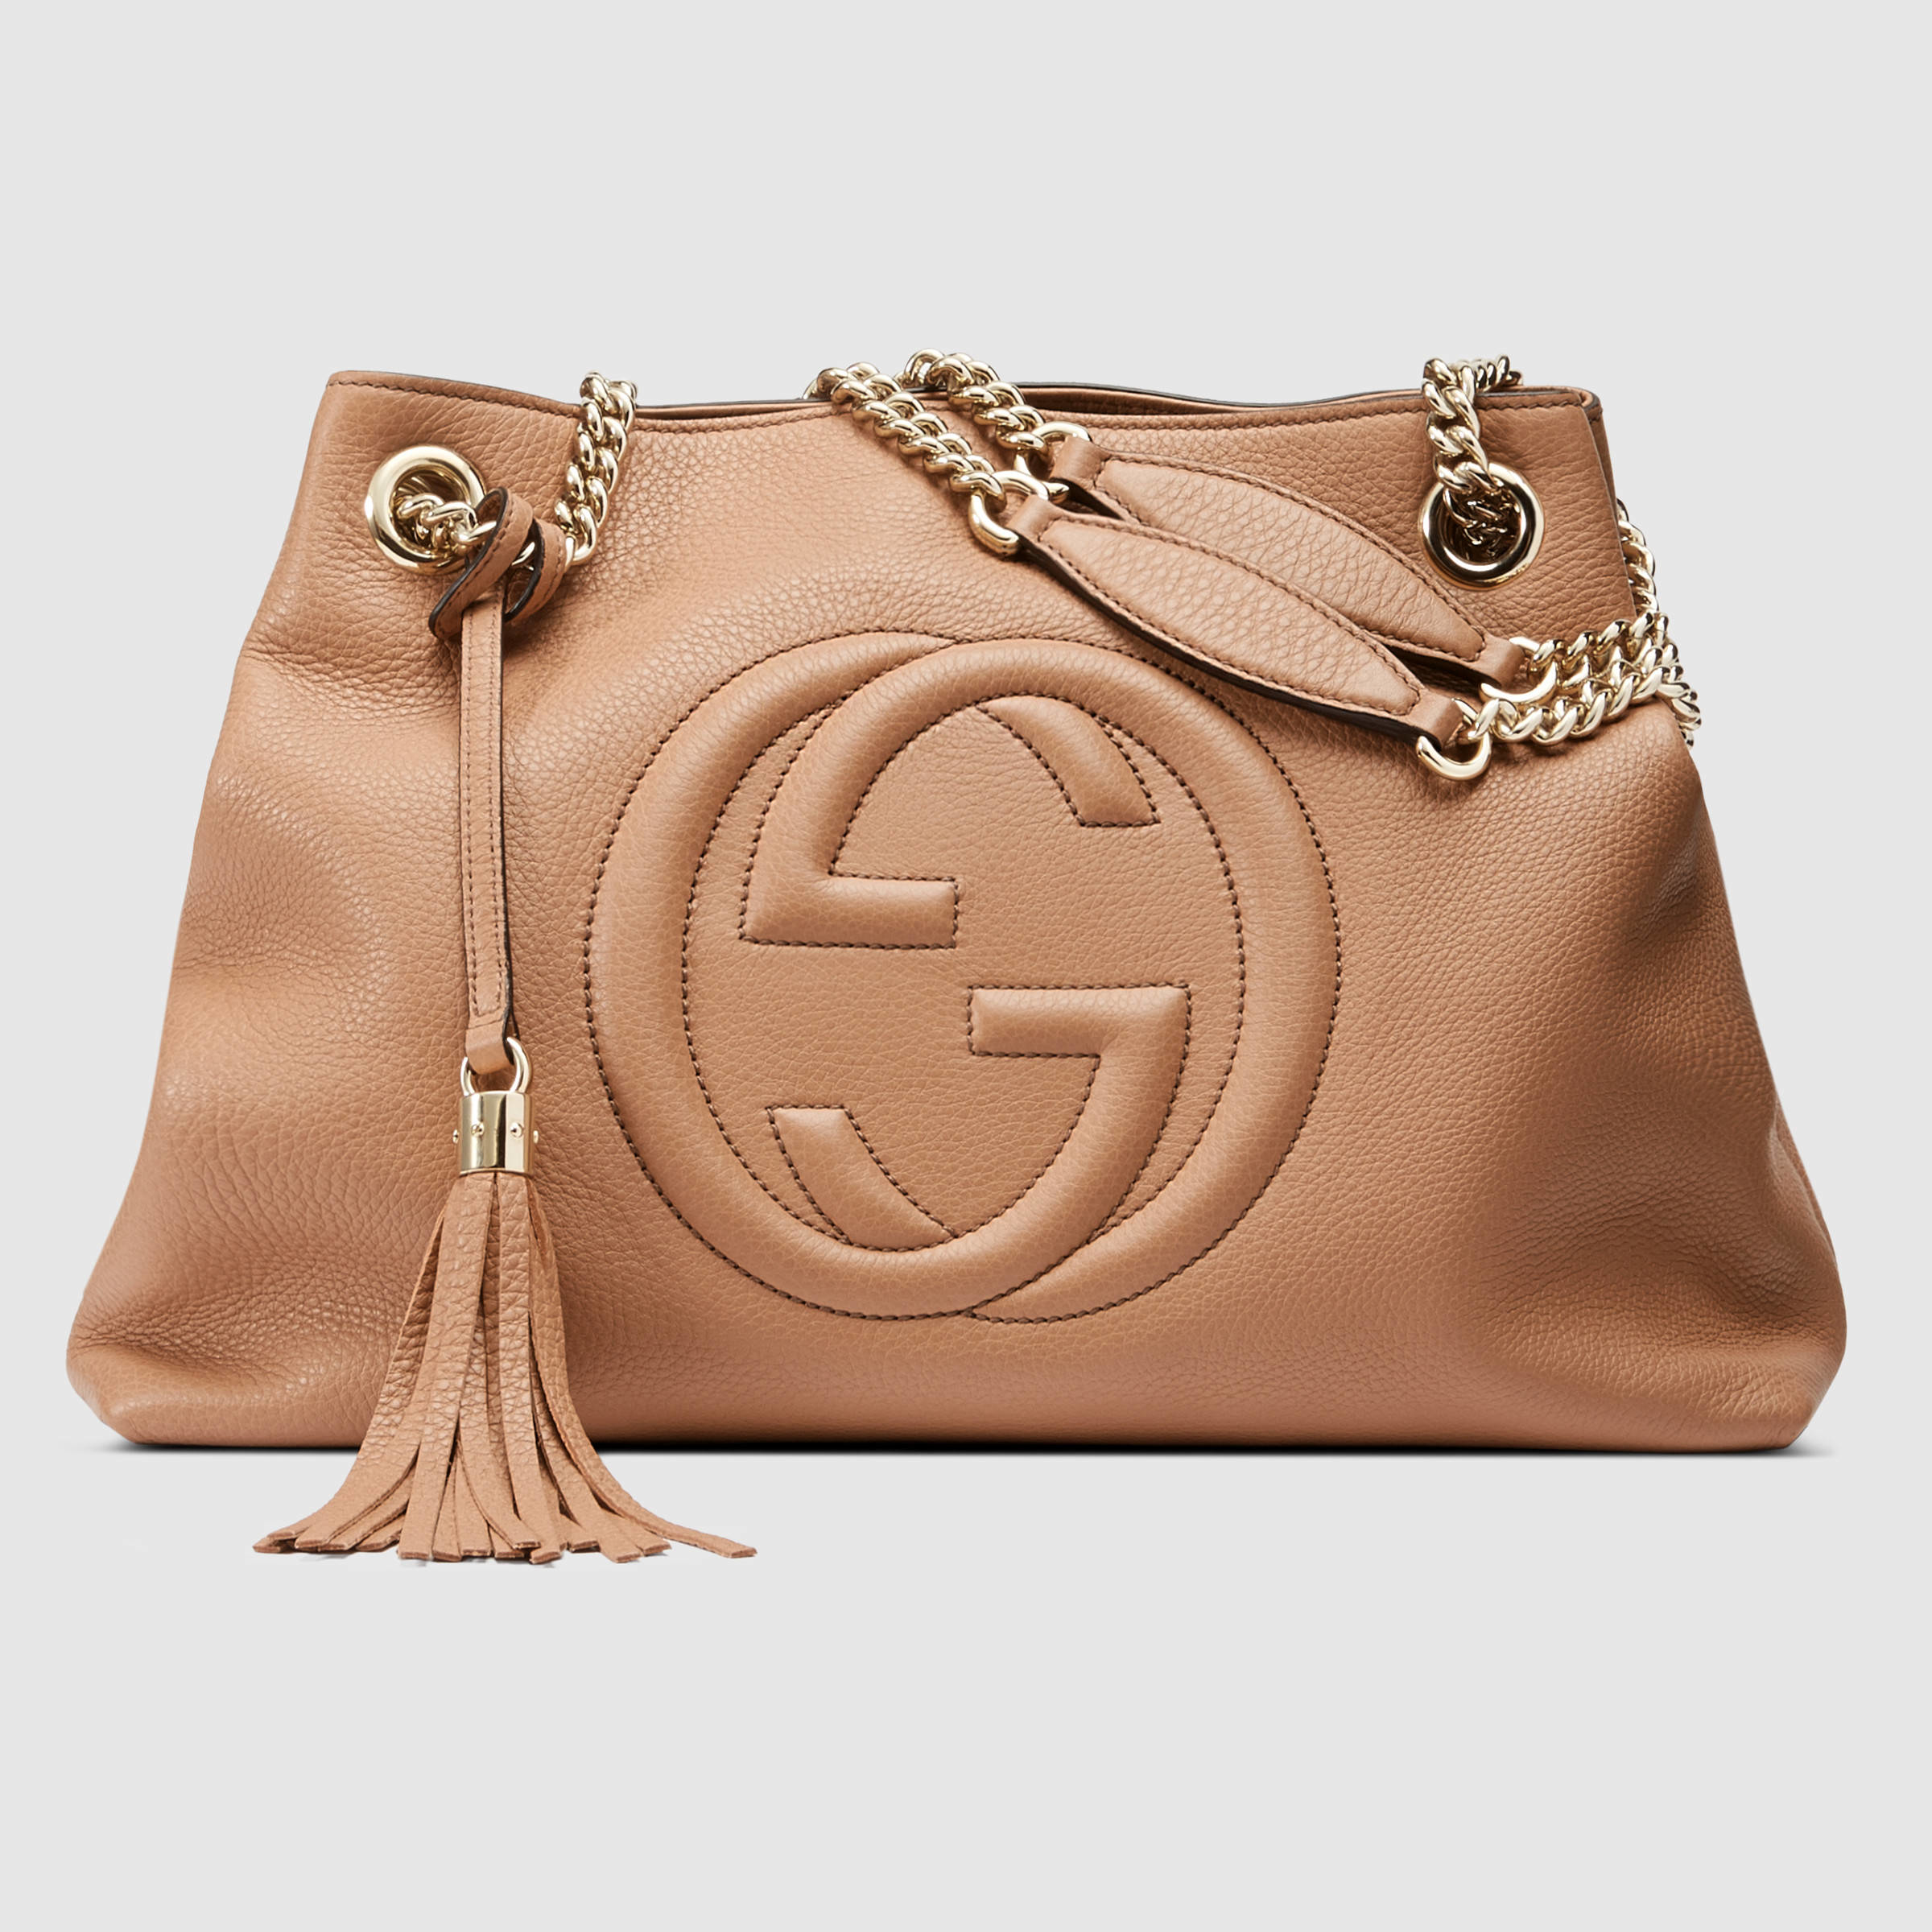 Gucci Soho Leather Shoulder Bag in Pink | Lyst